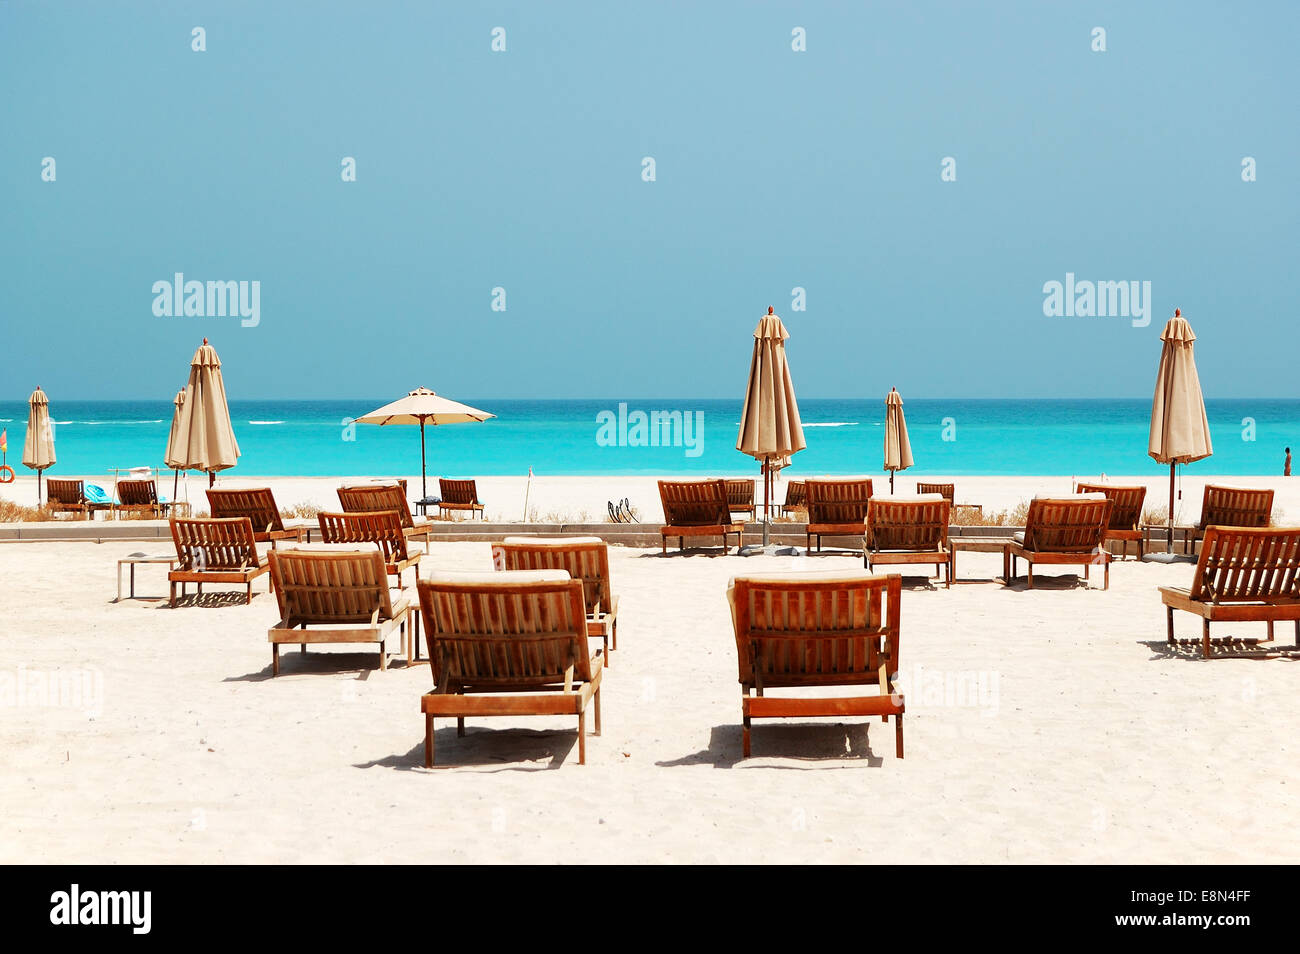 Beach of the luxury hotel, Abu Dhabi, UAE Stock Photo